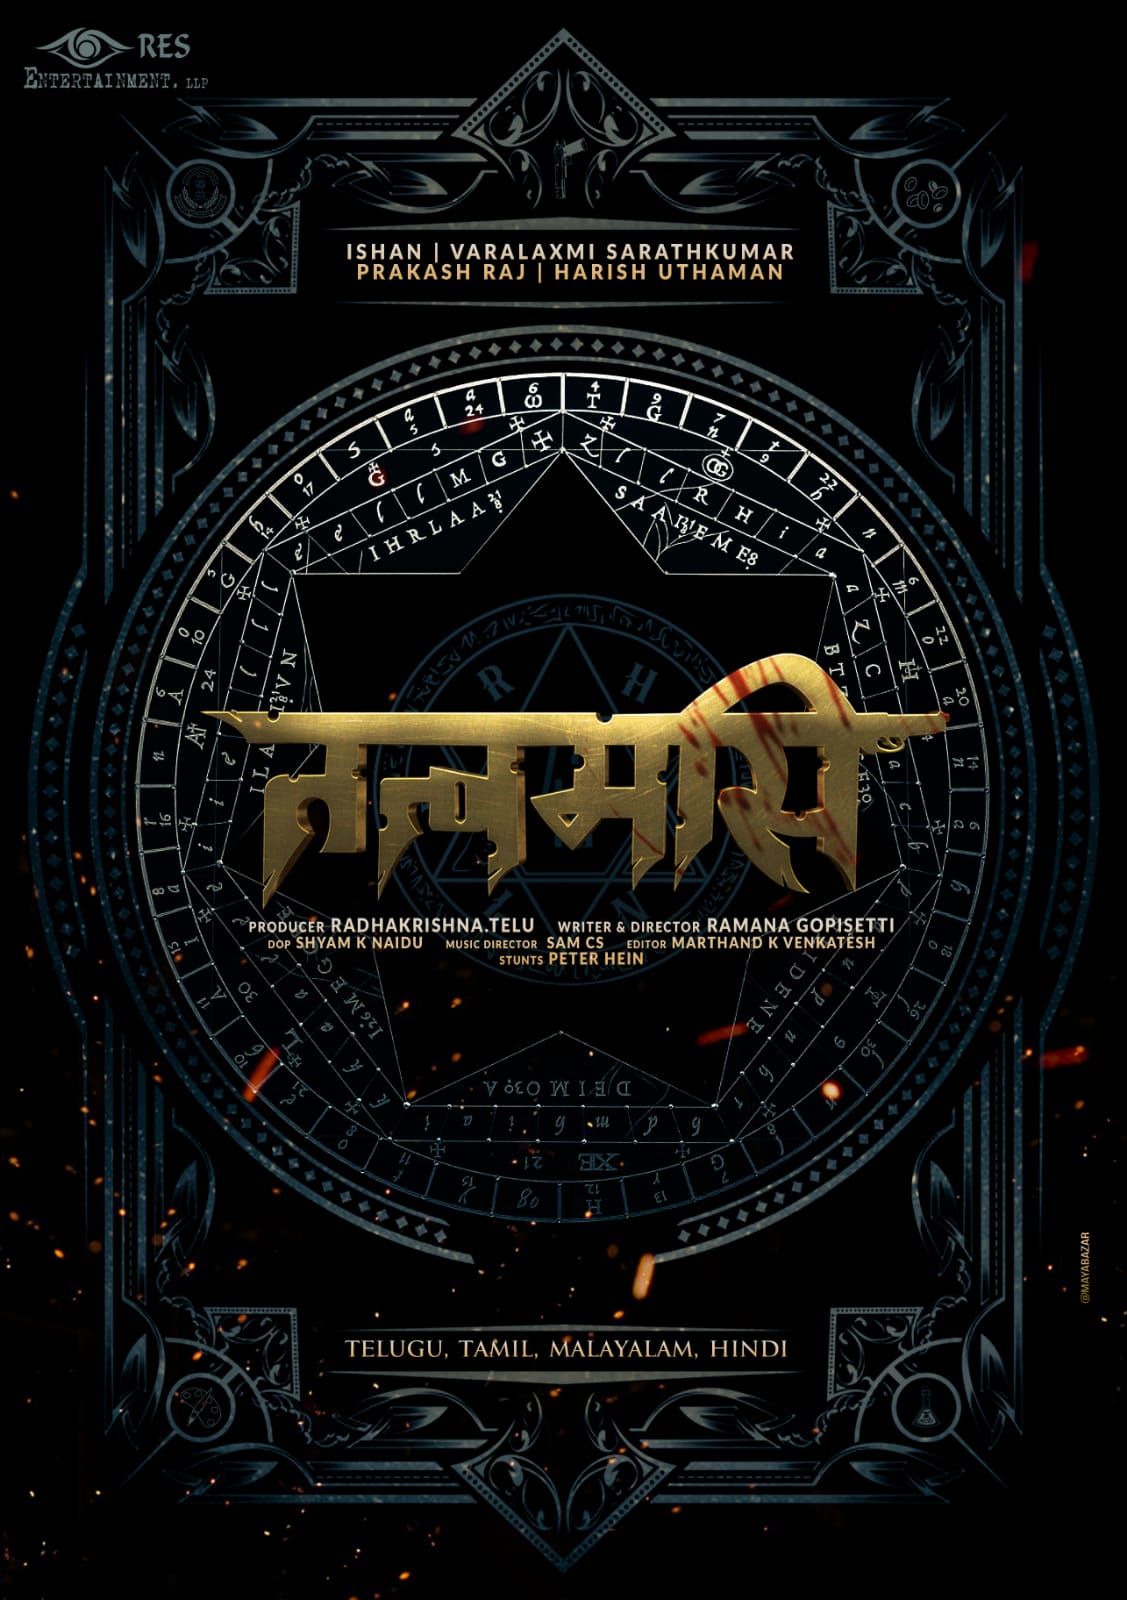 Pan India Film Tatvamasi Concept Poster is Out